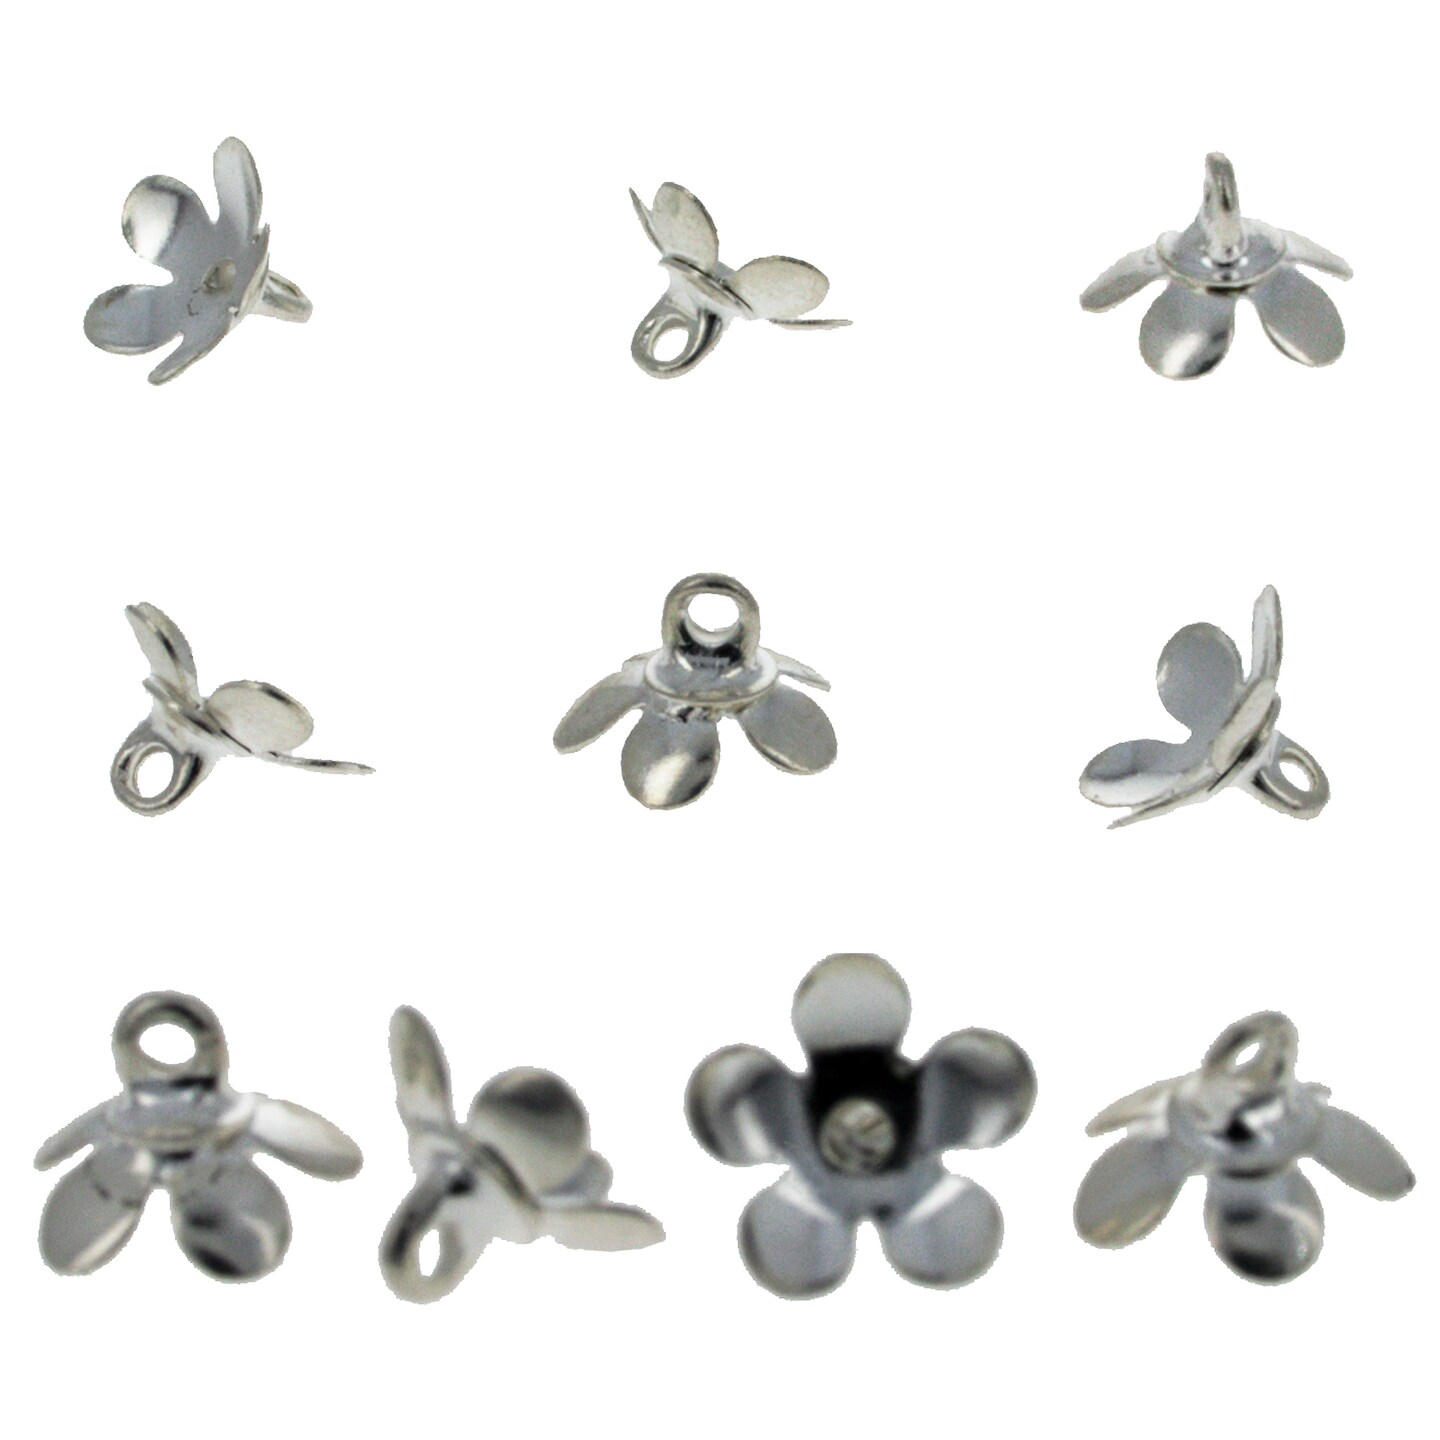 10 Medium Silver Tone Metal Ornament Caps - Egg Top Findings, End Caps 0.34 Inches